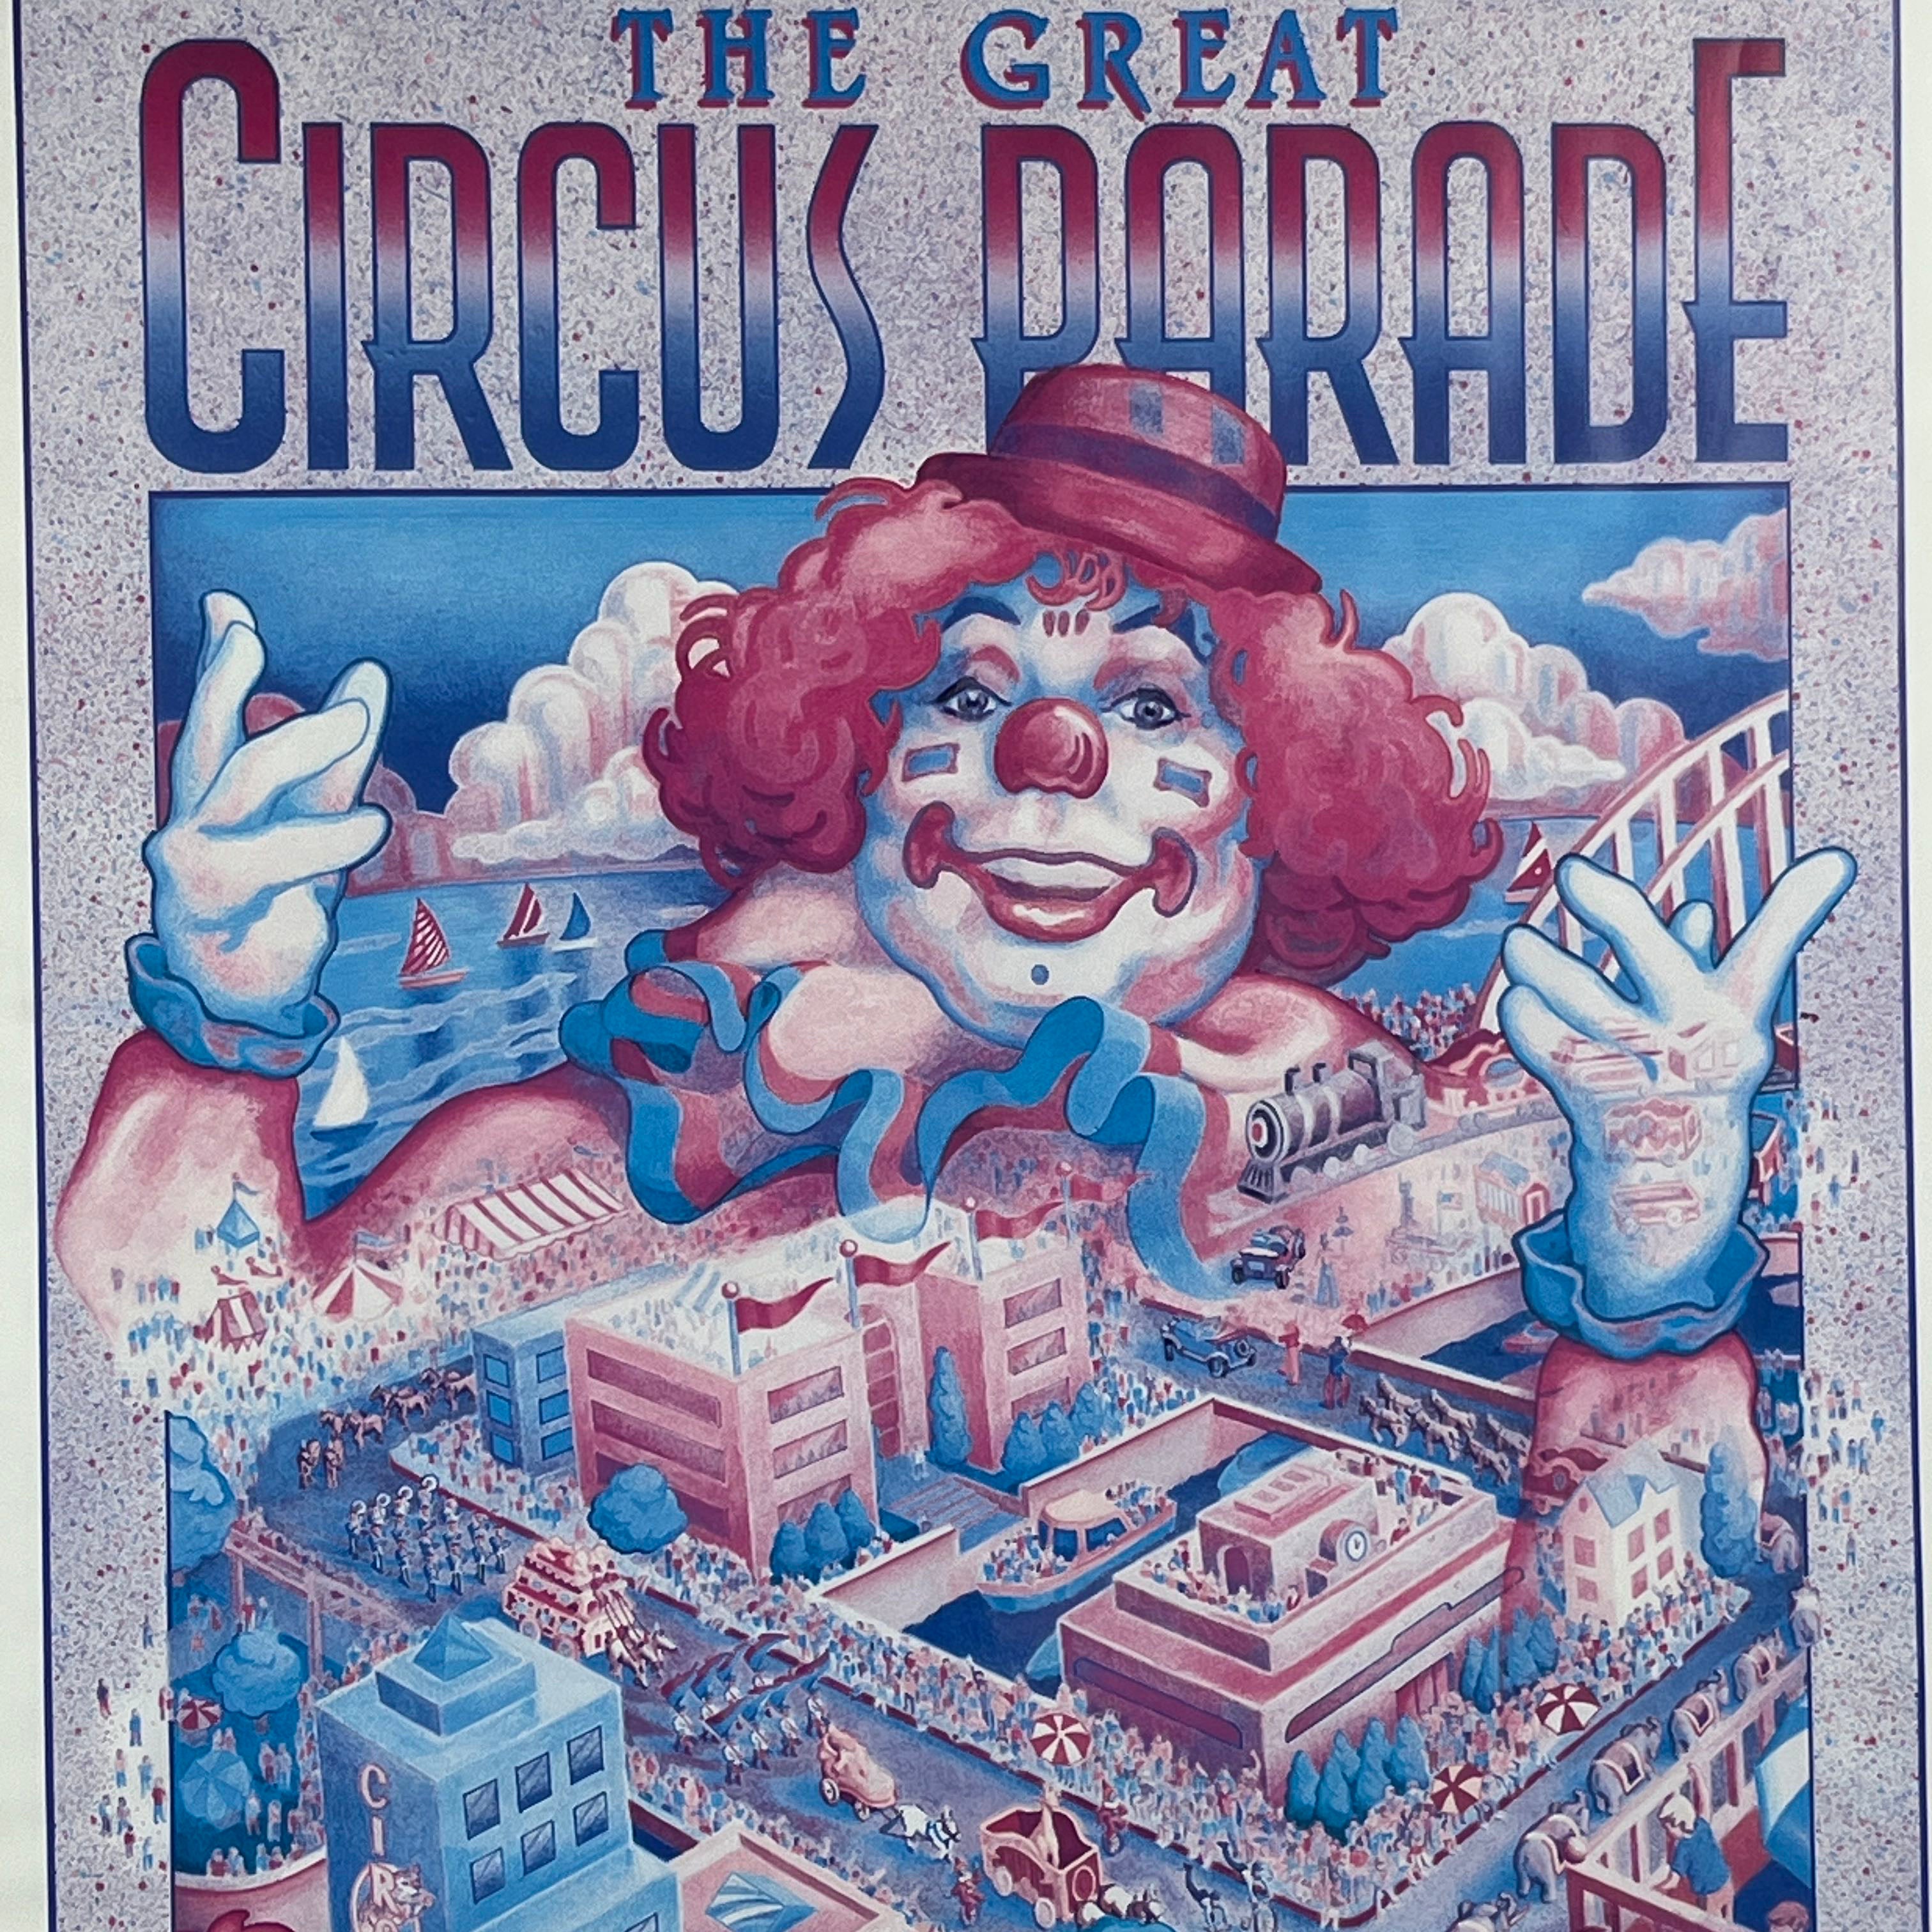 The Great Circus Parade, Milwaukee